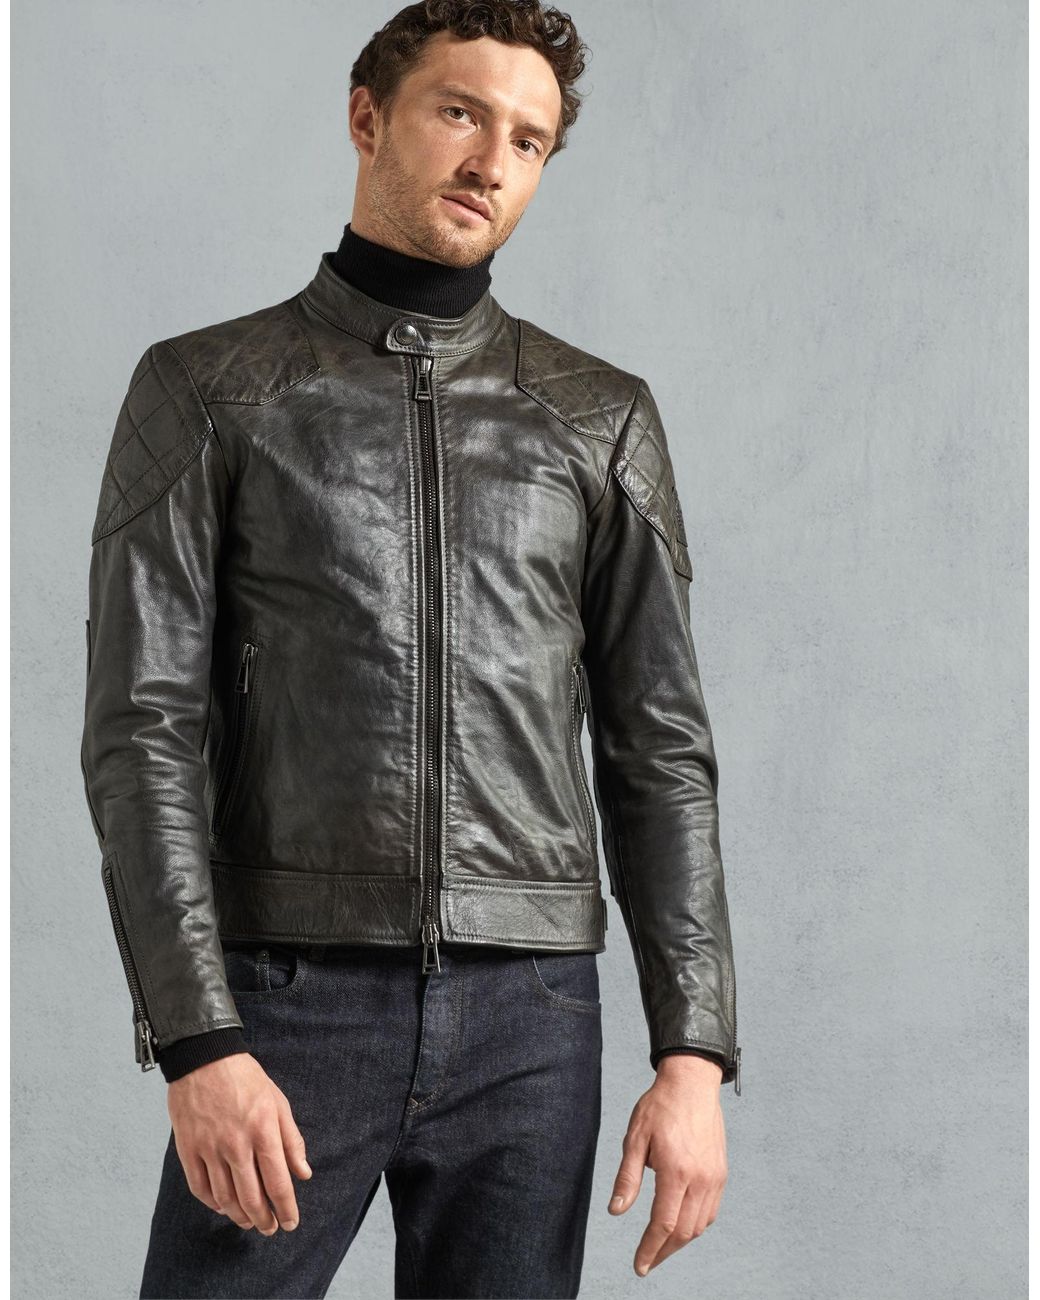 belstaff outlaw leather jacket